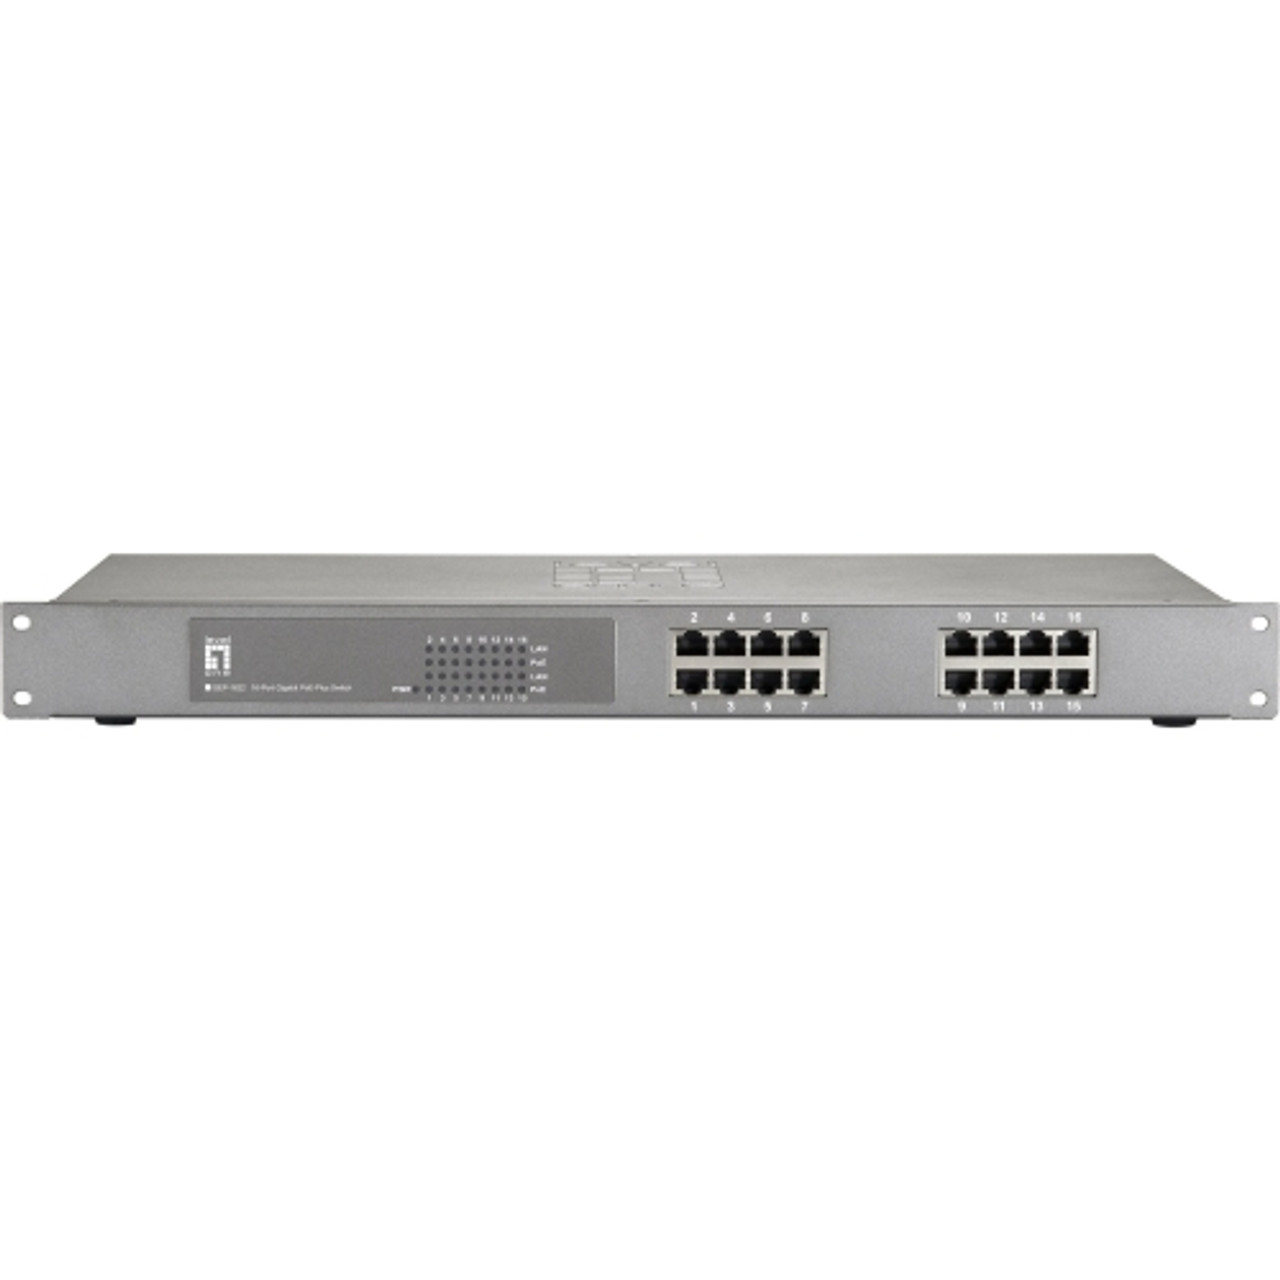 GEP-1622 LevelOne 16-Port Gigabit PoE Plus 19 Rack Mounatble Switch (480W) 2 Layer Supported Desktop (Refurbished)